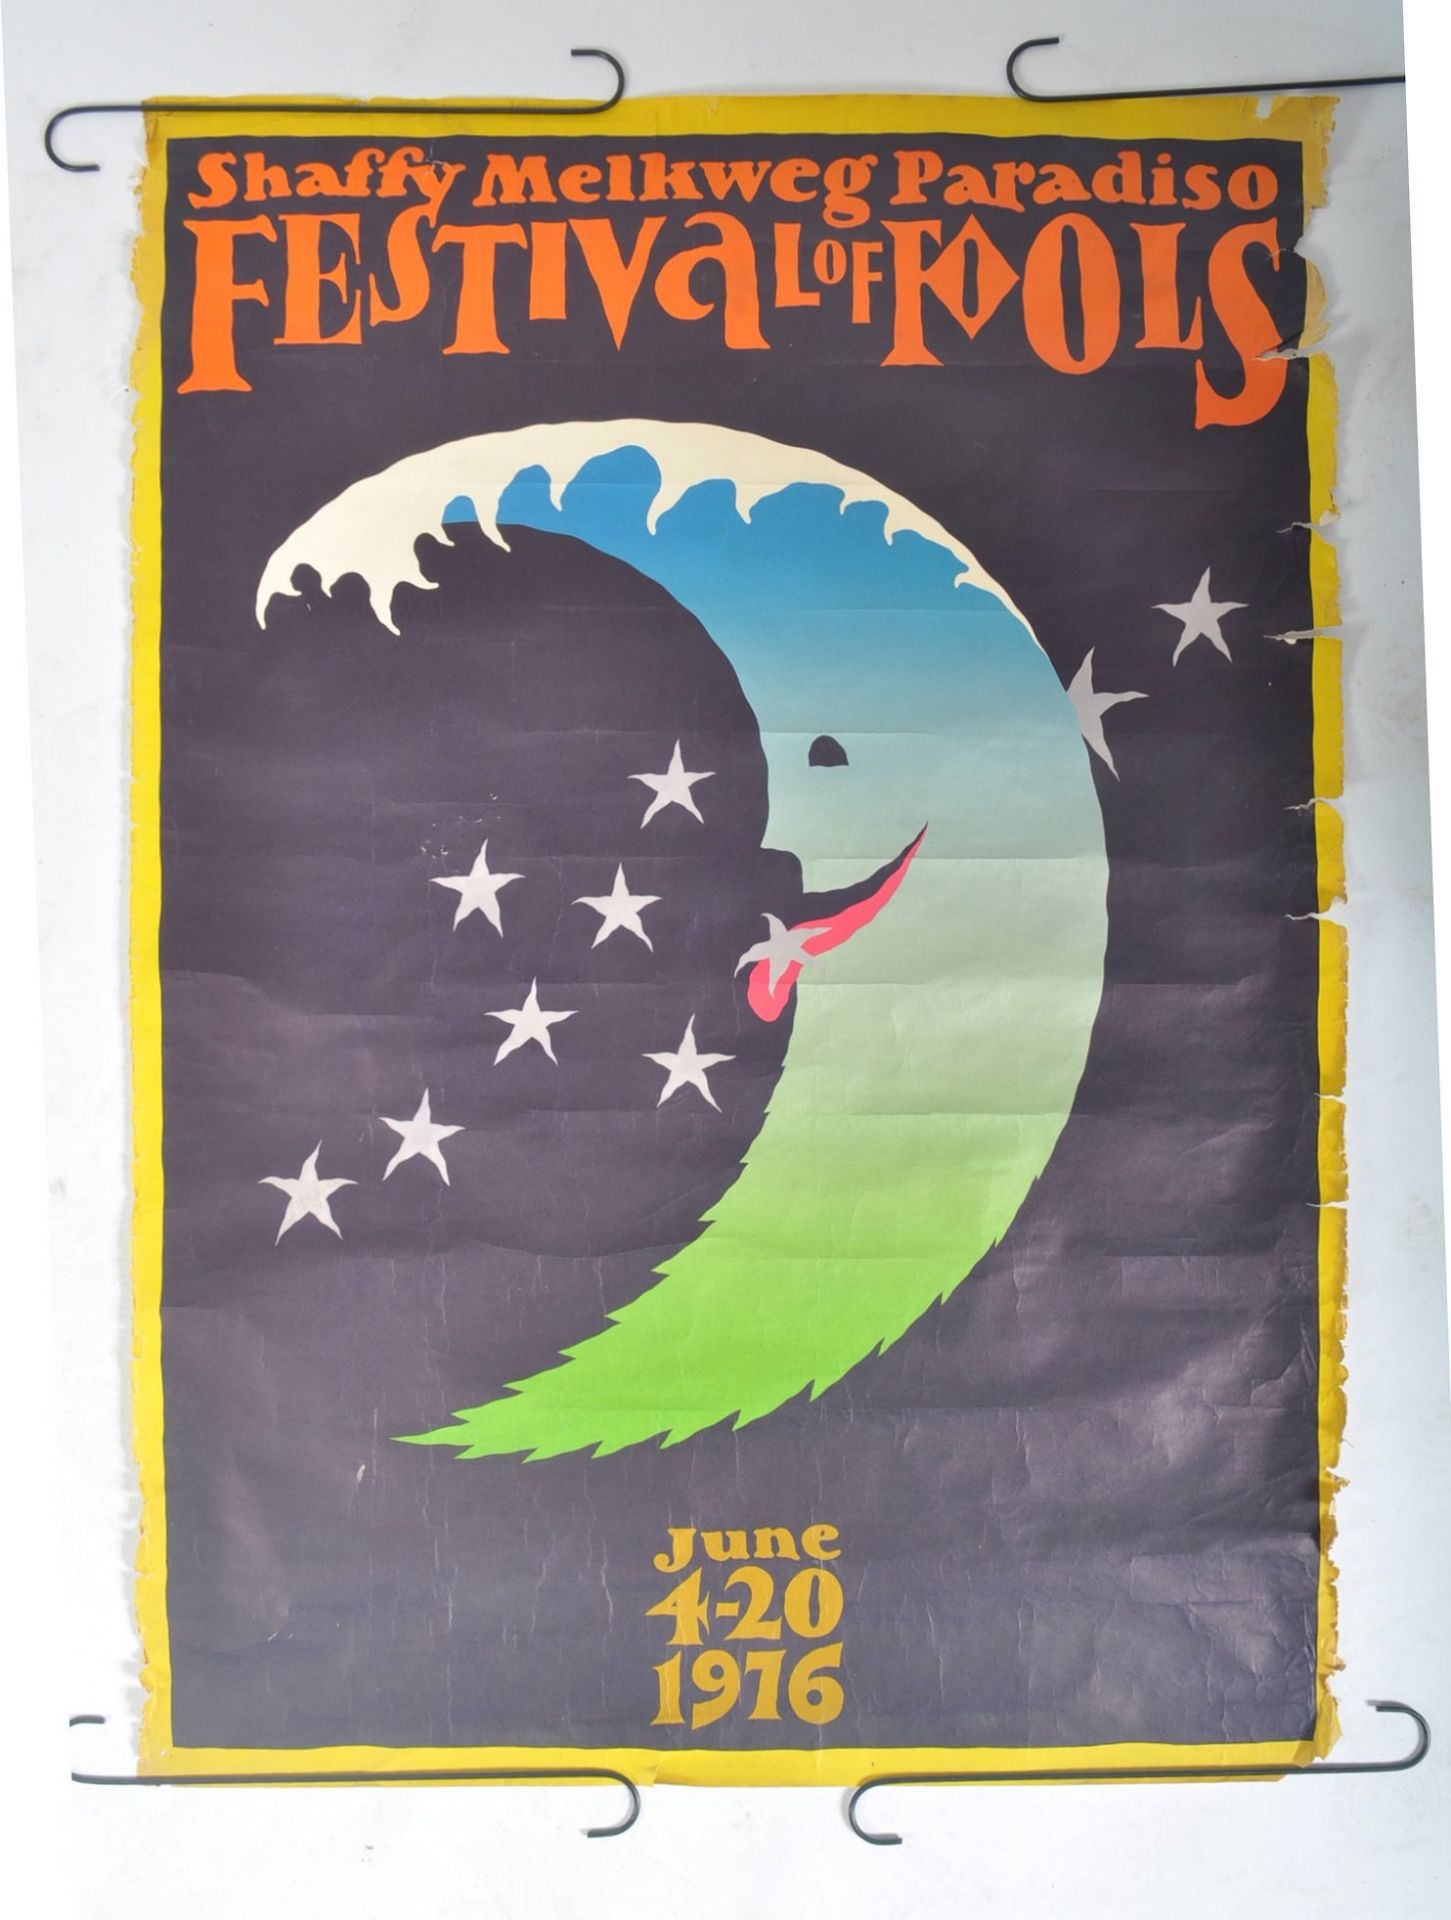 ADVERTISING - 1970s RETRO EUROPEAN FESTIVAL OF FOOLS POSTER